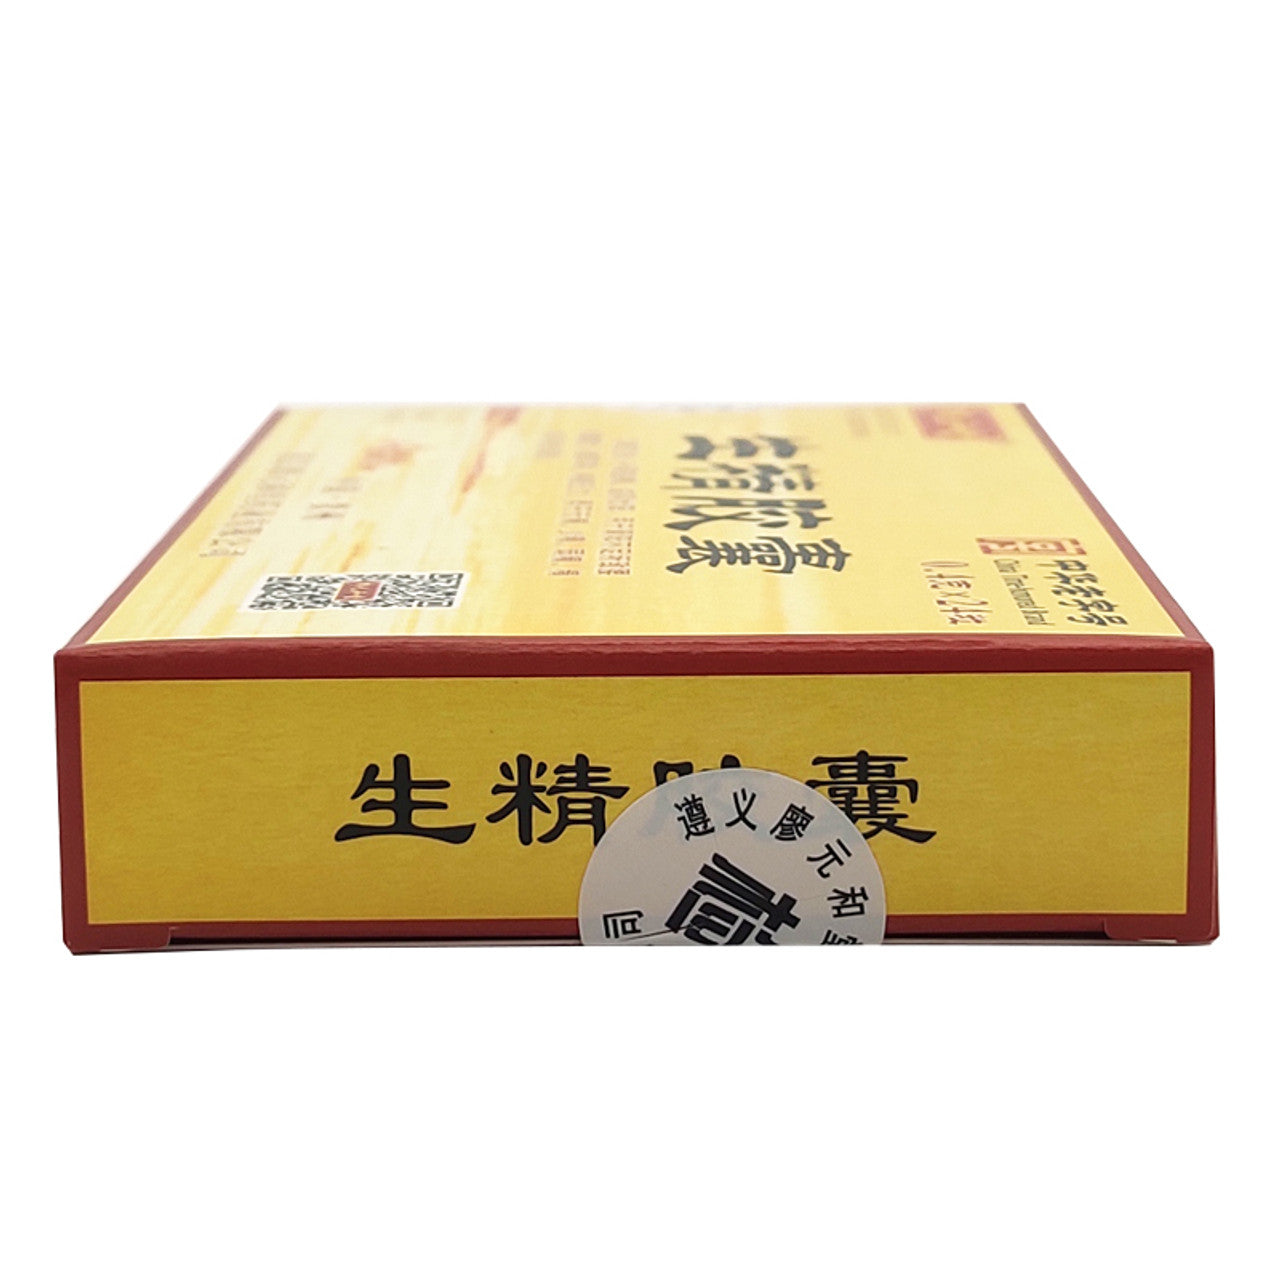 Herbal Supplement Shengjing Capsule / Shengjing Jiaonang / Sheng Jing Capsule / Sheng Jing Jiaonang